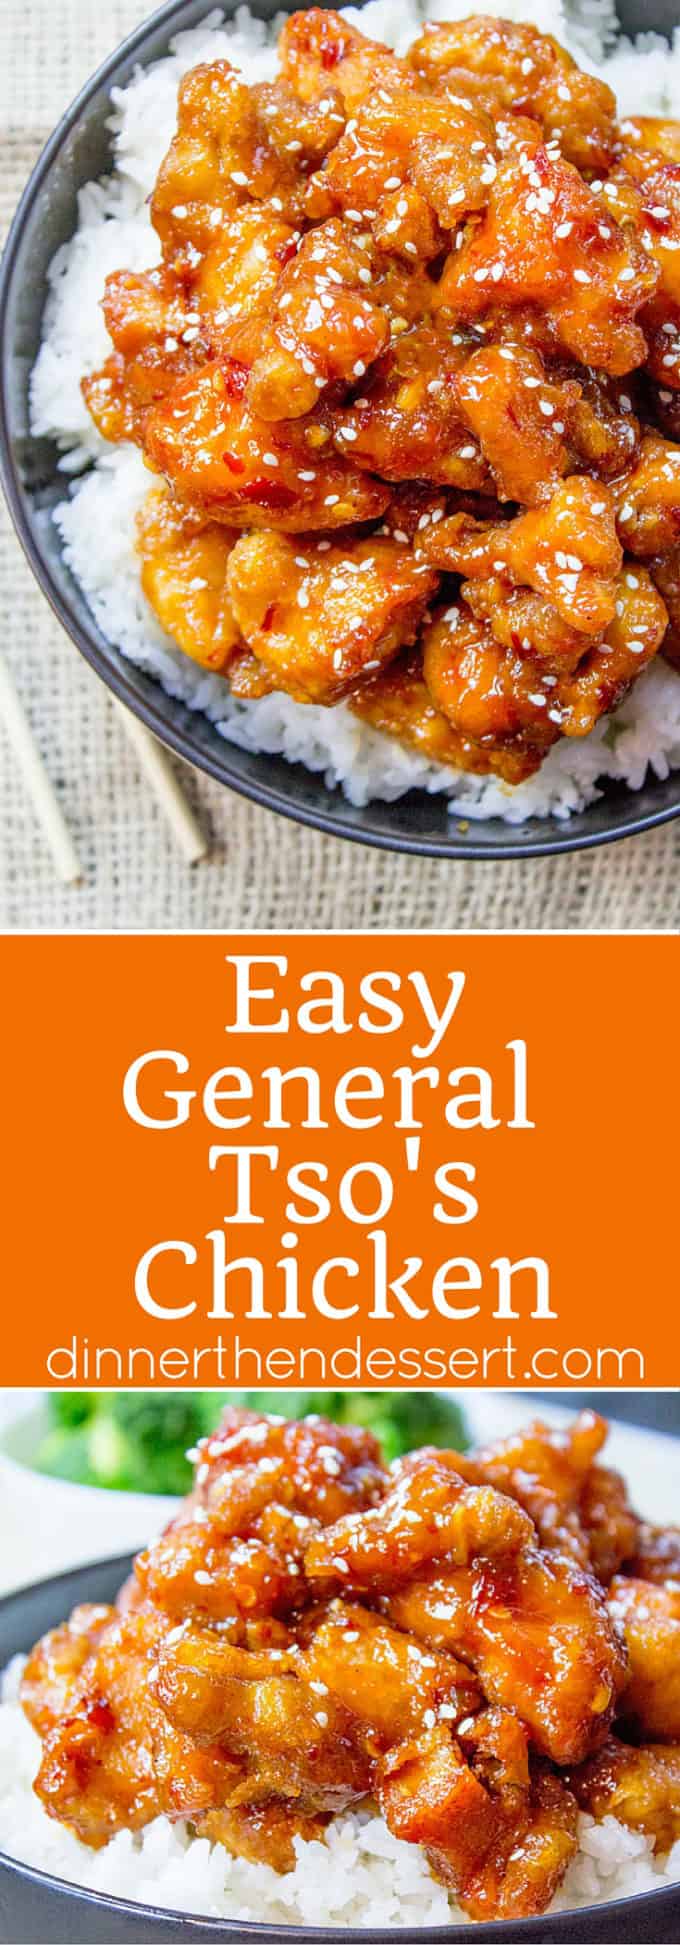 Easy General Tso's Chicken Recipe [+VIDEO] - Dinner Then Dessert